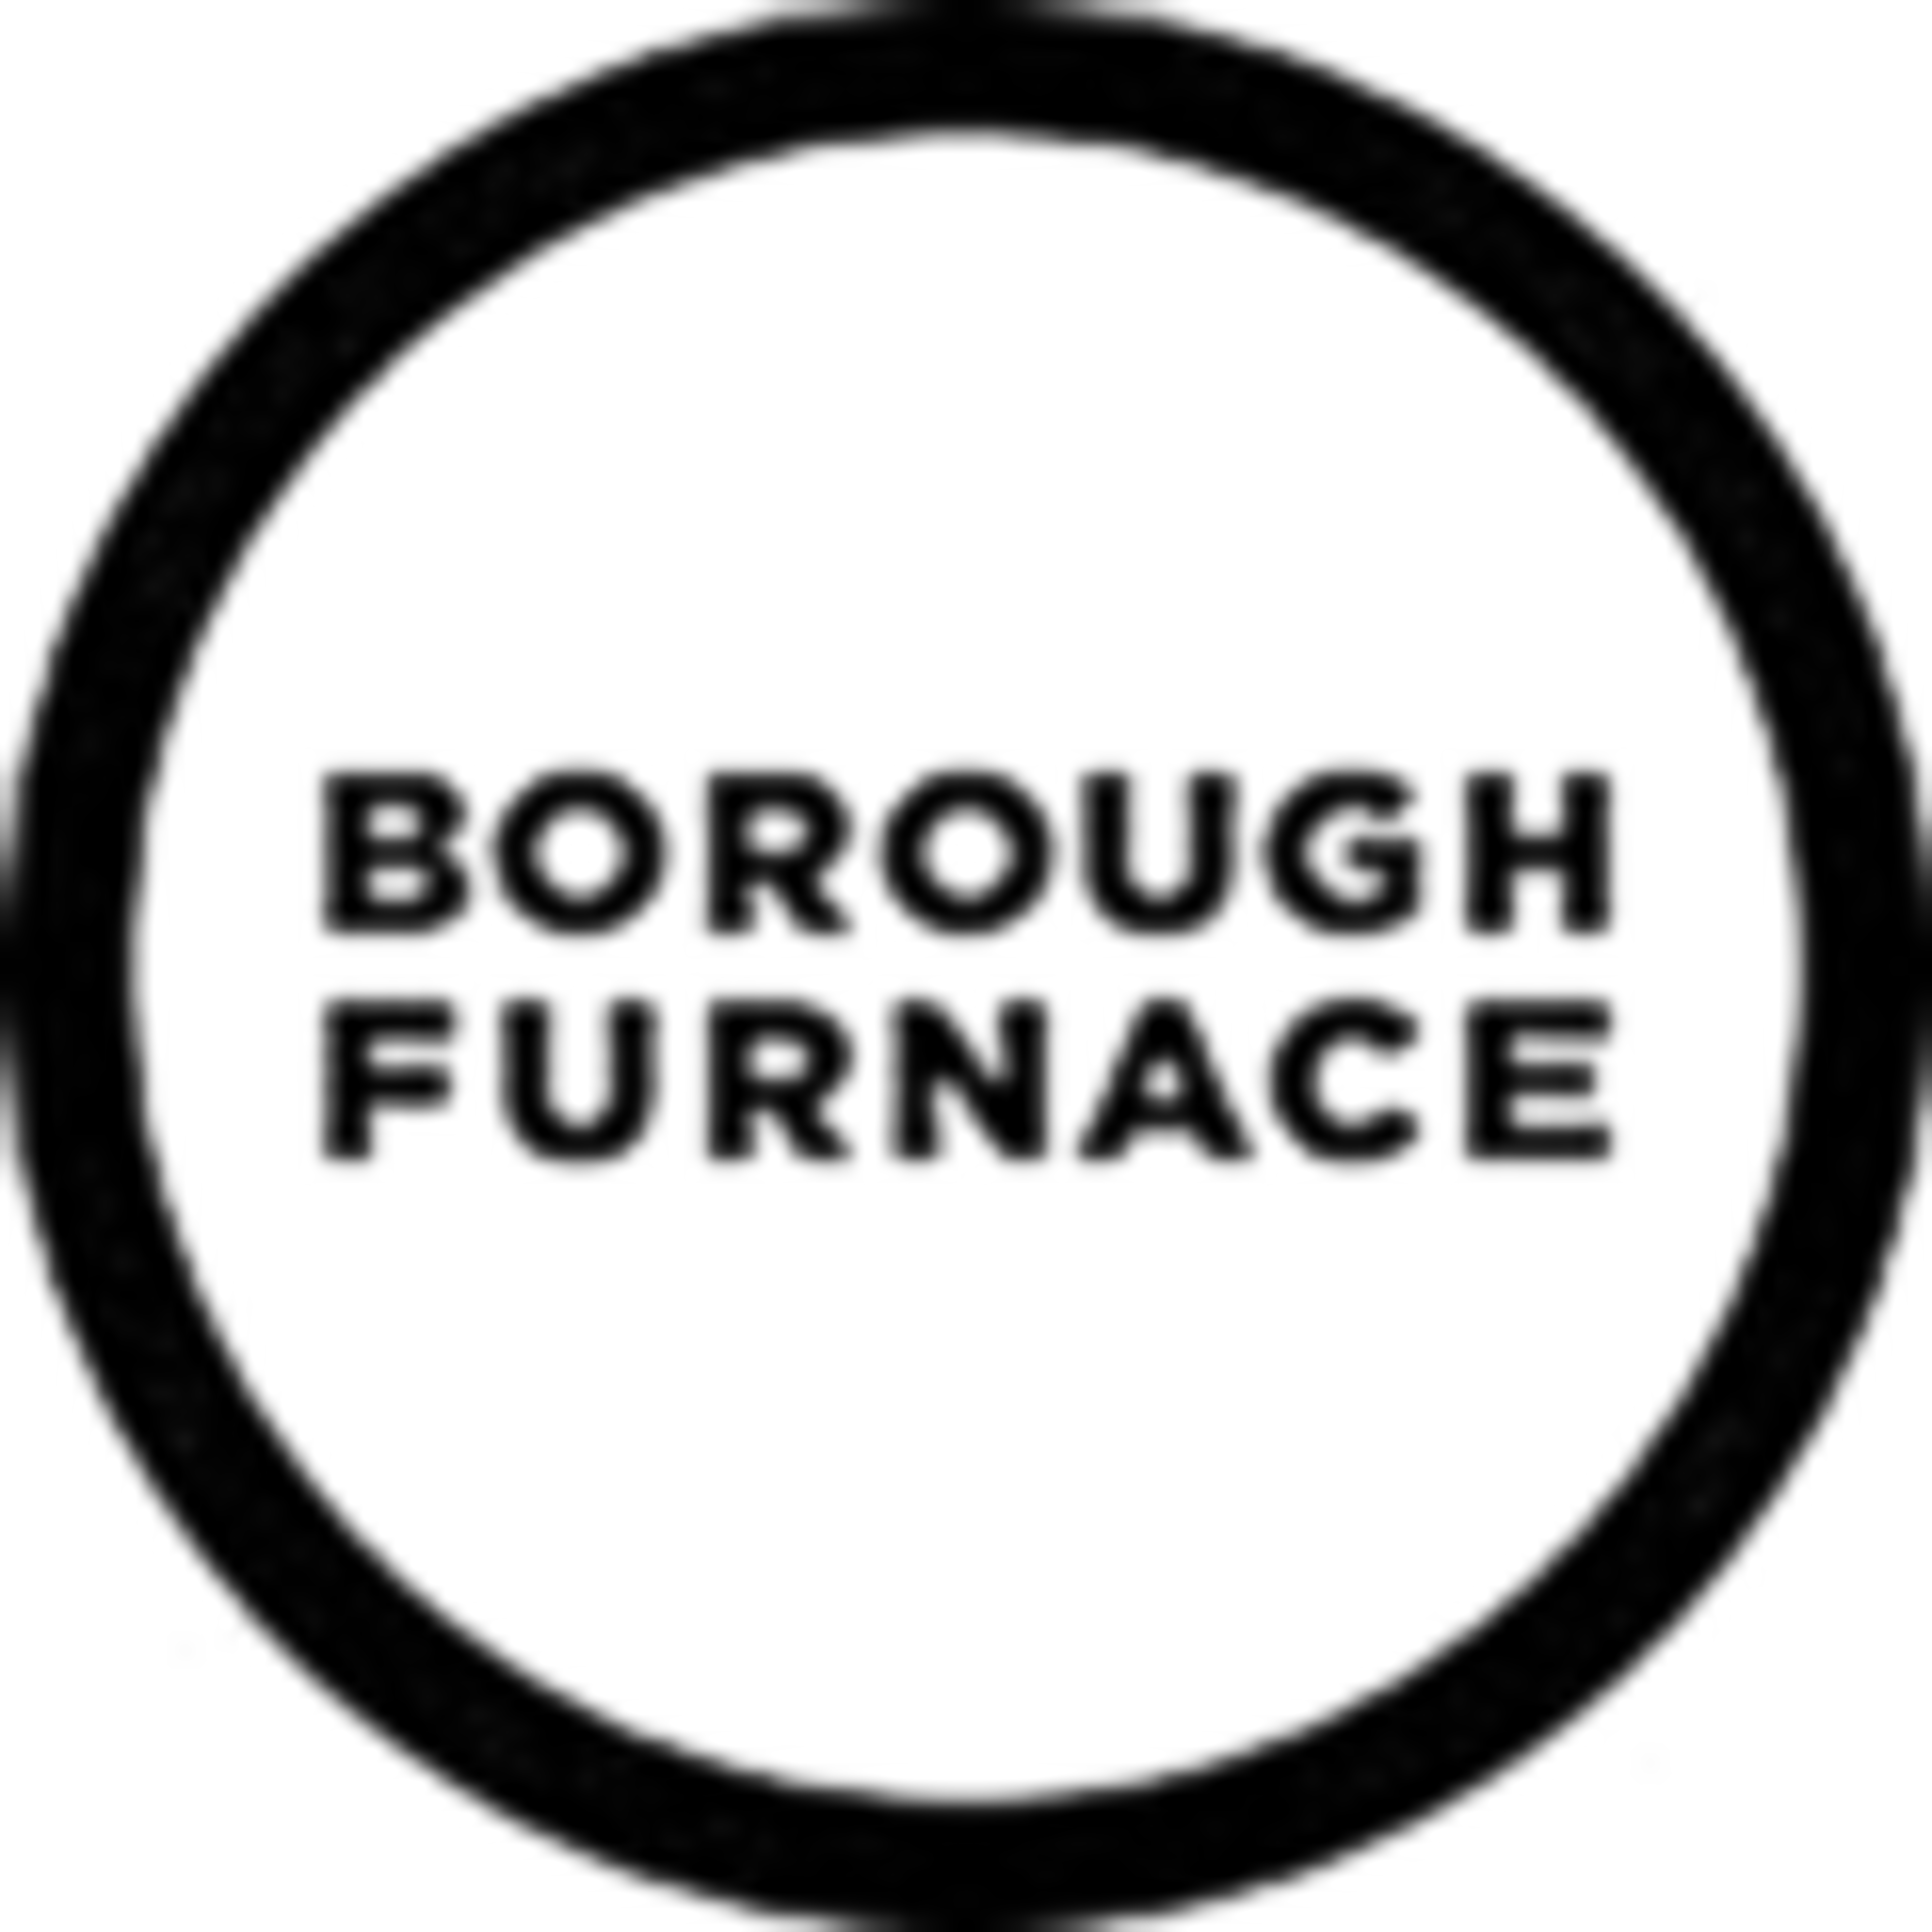 boroughfurnace